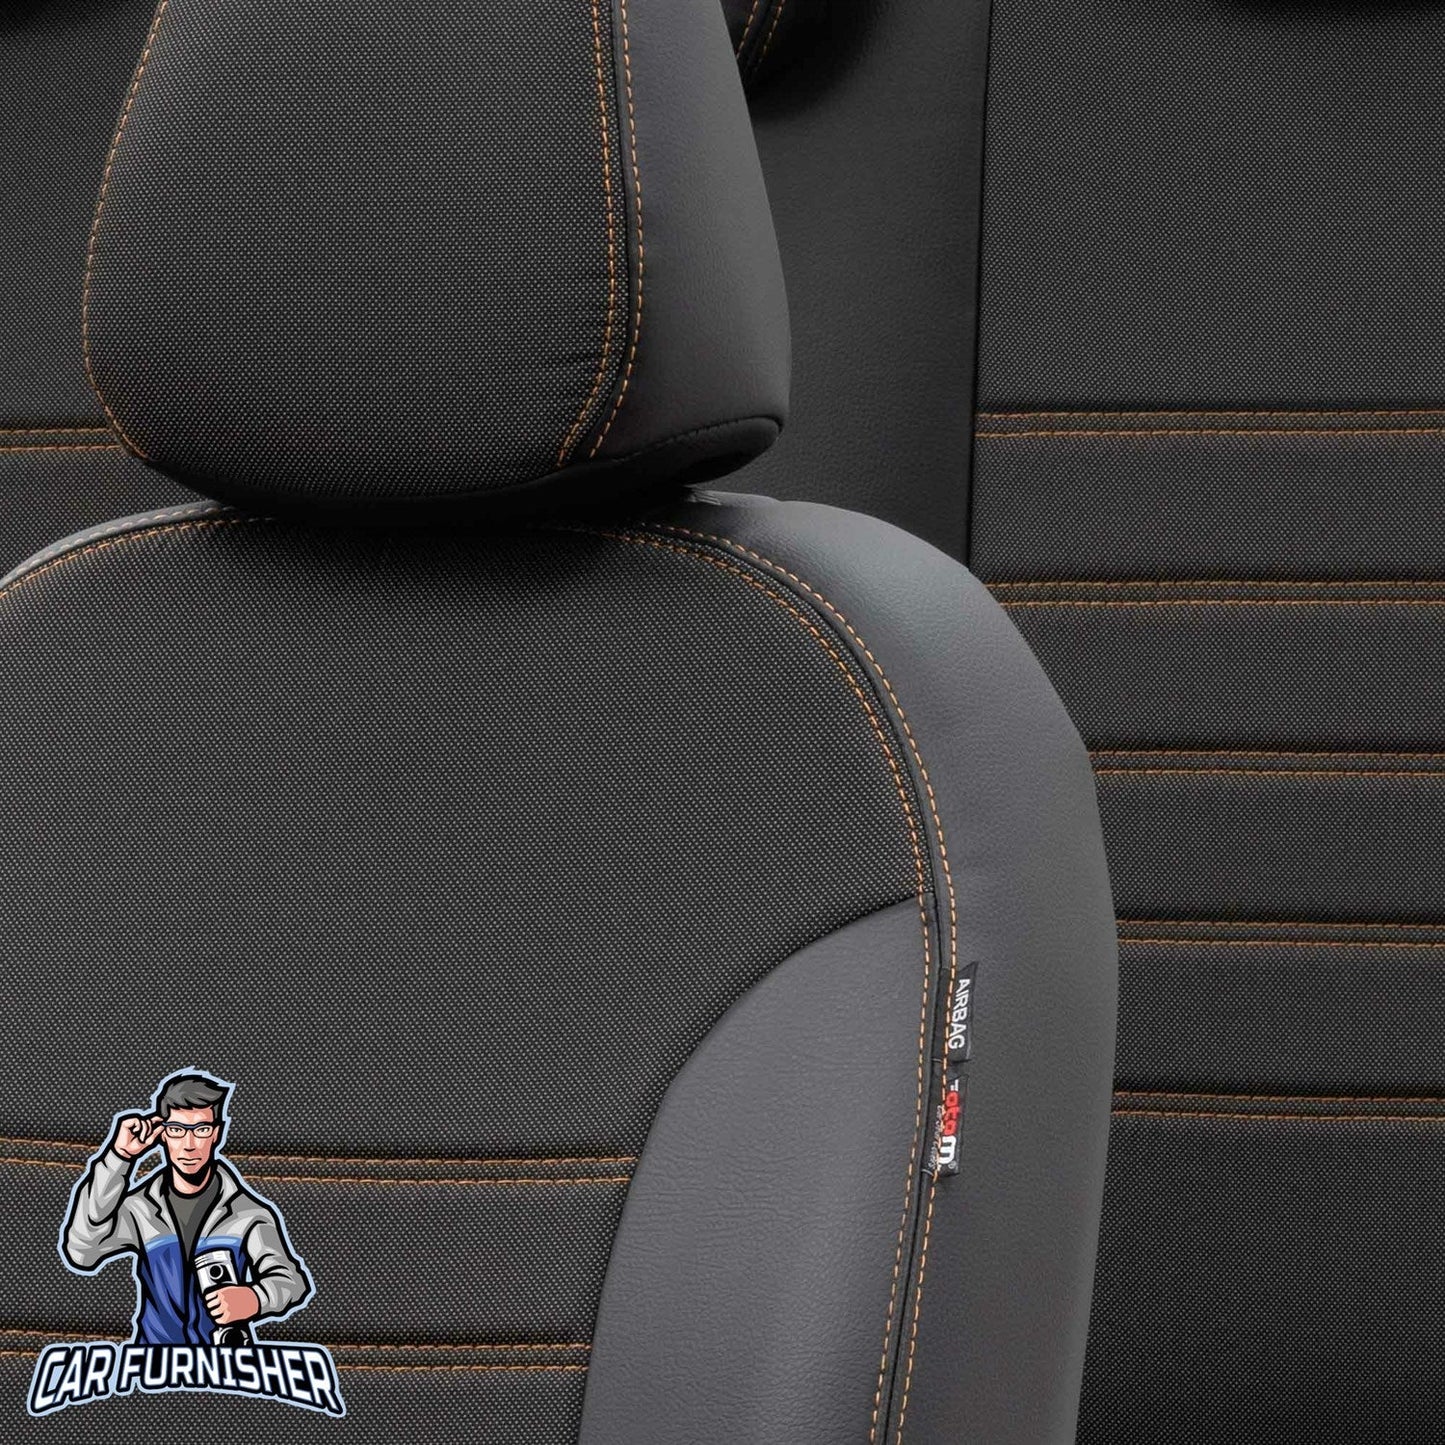 Mercedes EQC Seat Covers Paris Leather & Jacquard Design Dark Beige Leather & Jacquard Fabric